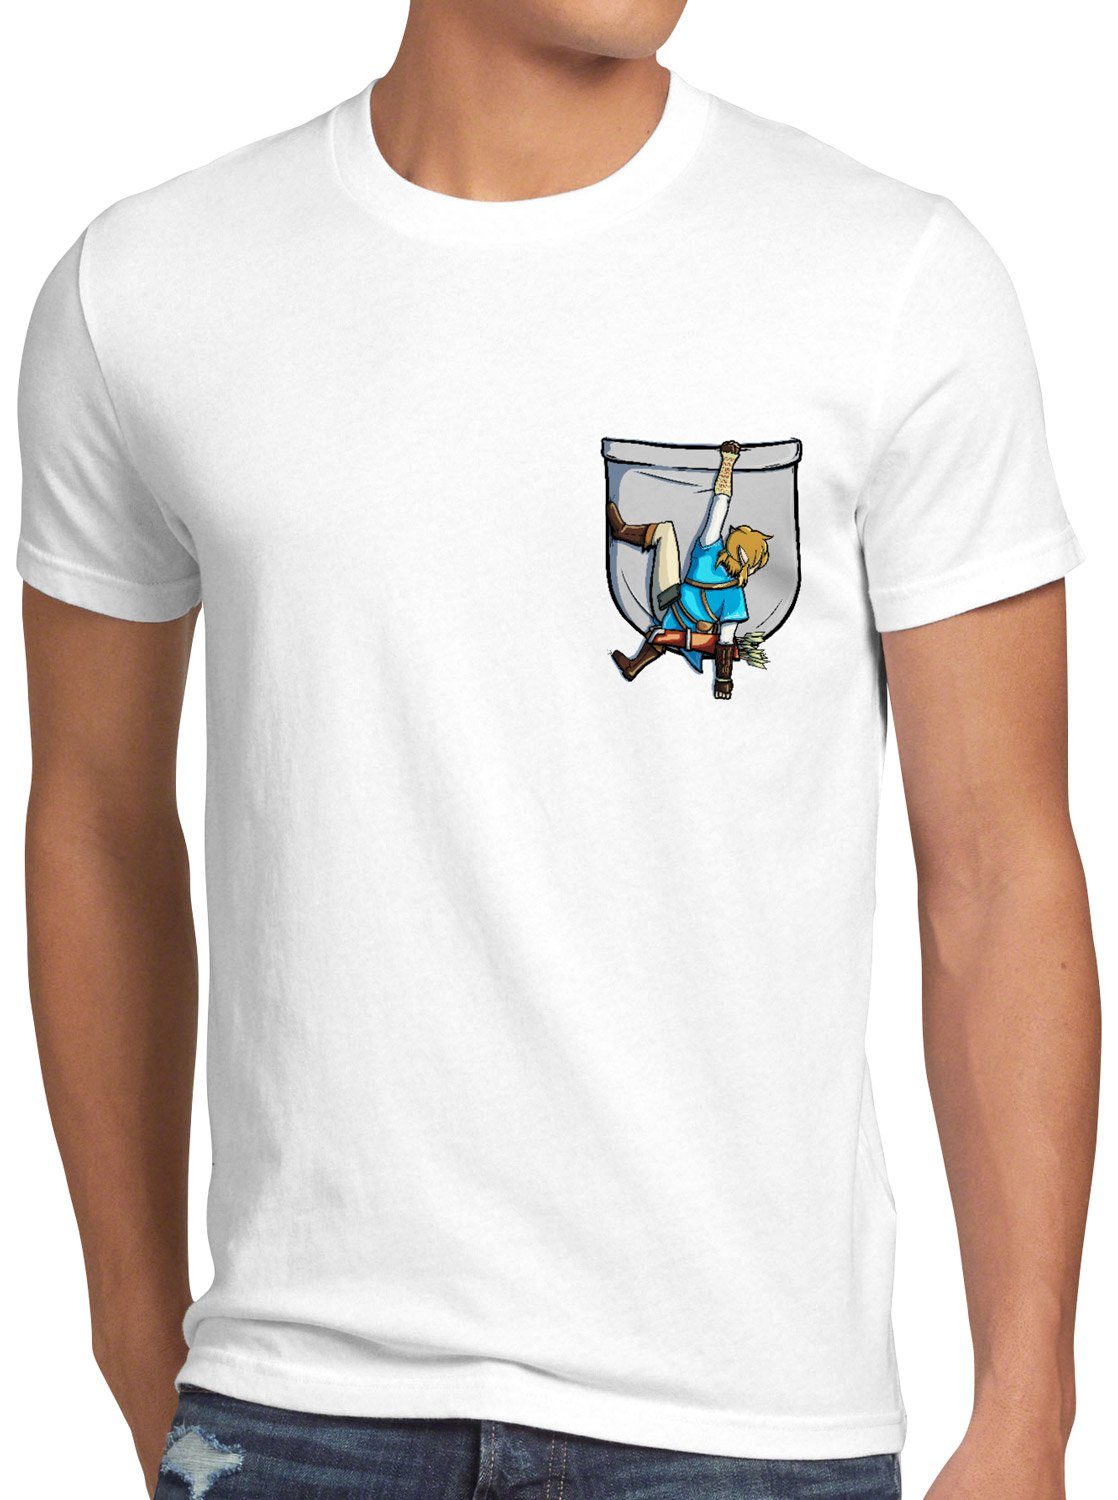 Wild Herren hyrule T-Shirt hemdtasche Link style3 Print-Shirt weiß gamer